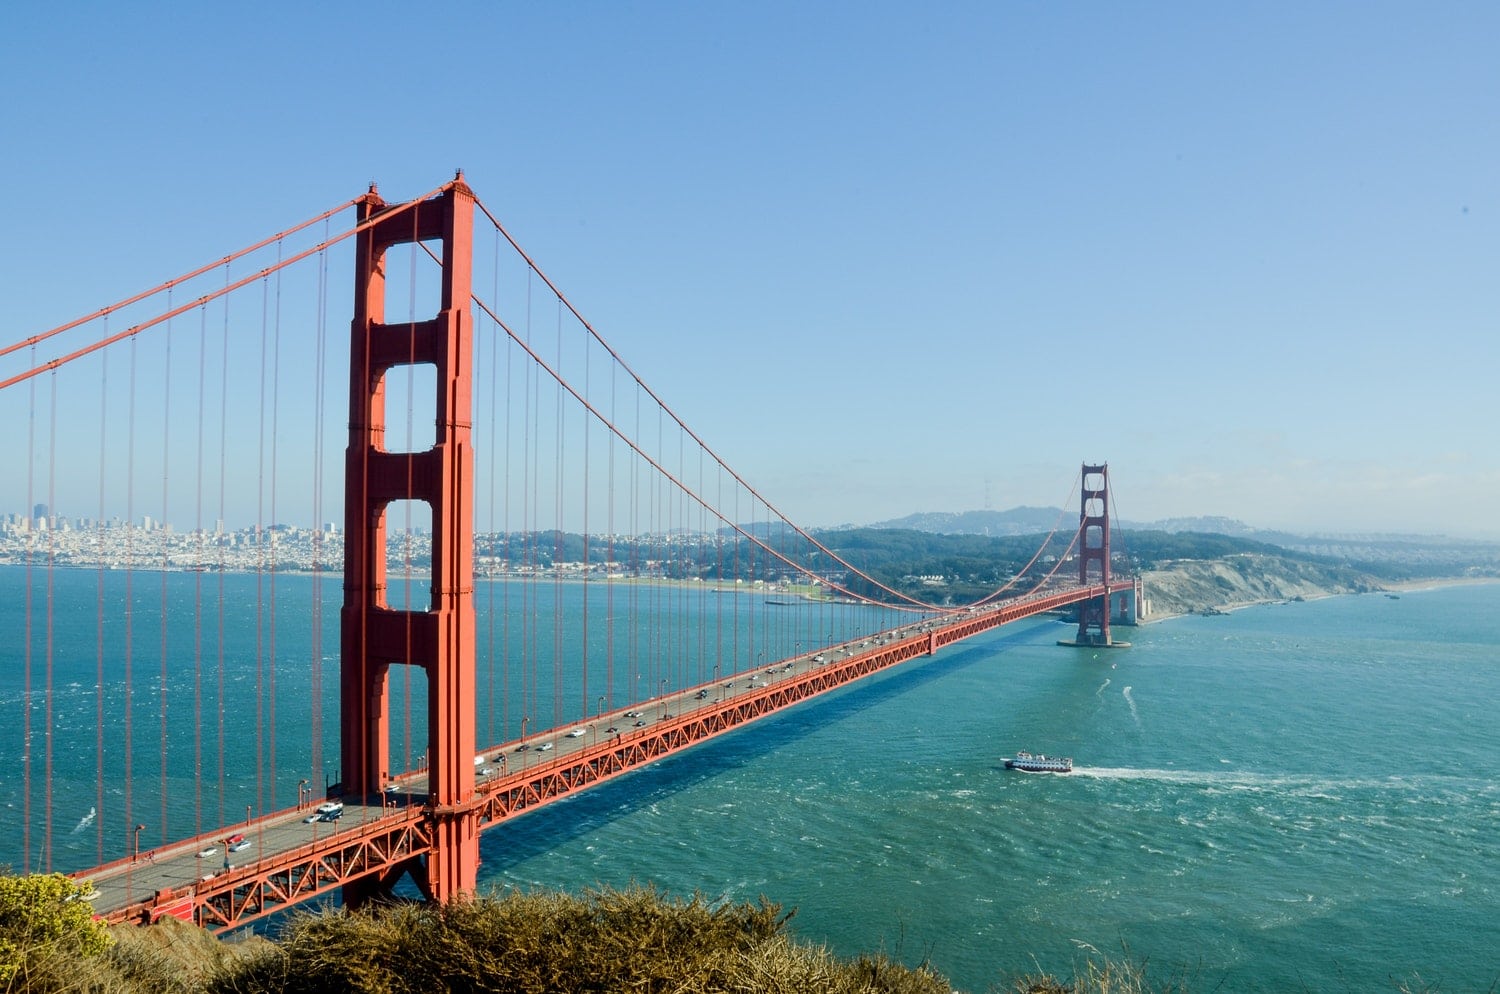 Fun day trips await across the Golden Gate Bridge in Northern California